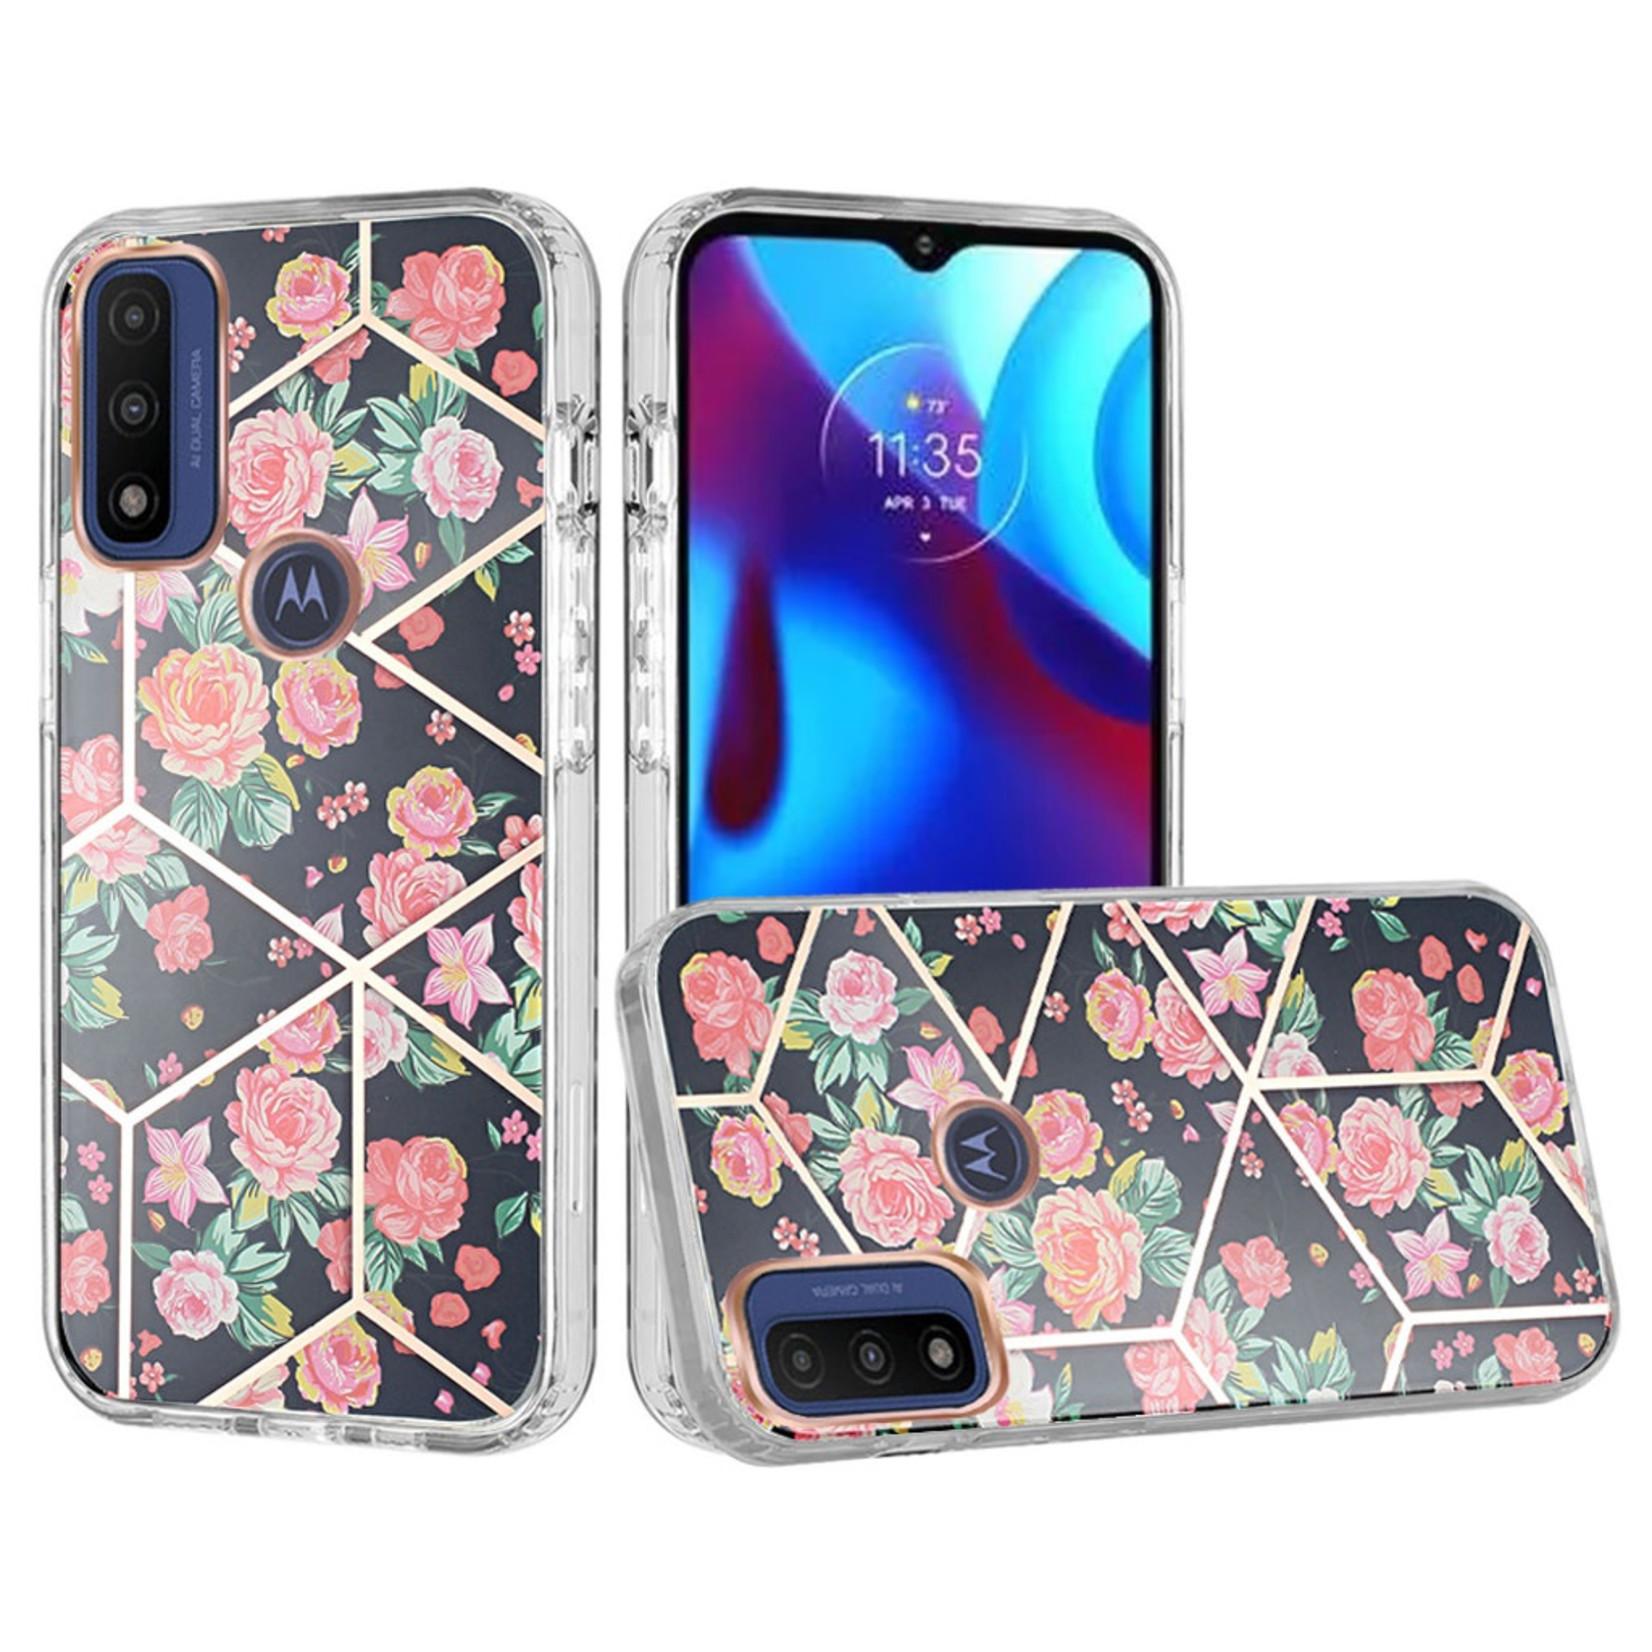 Motorola Floral IMD Chrome Design Shockproof Hybrid Case Cover for Motorola Moto G Pure / Power 2022 Retail Packaging Black /Pink